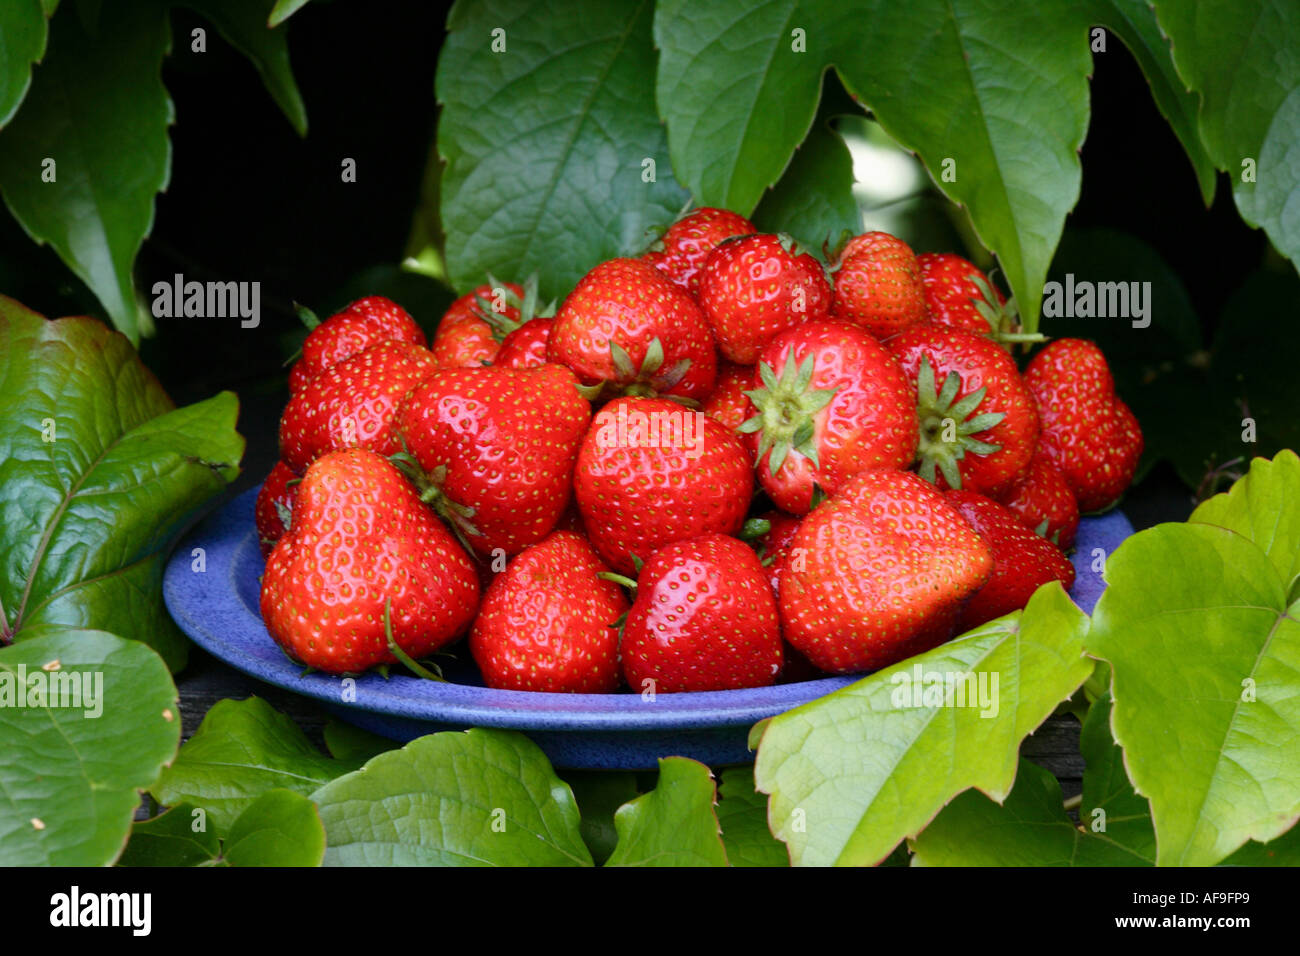 hybrid strawberry, garden strawberry (Fragaria x ananassa (Fragaria ananassa)), blue plate with ripe strawberries Stock Photo